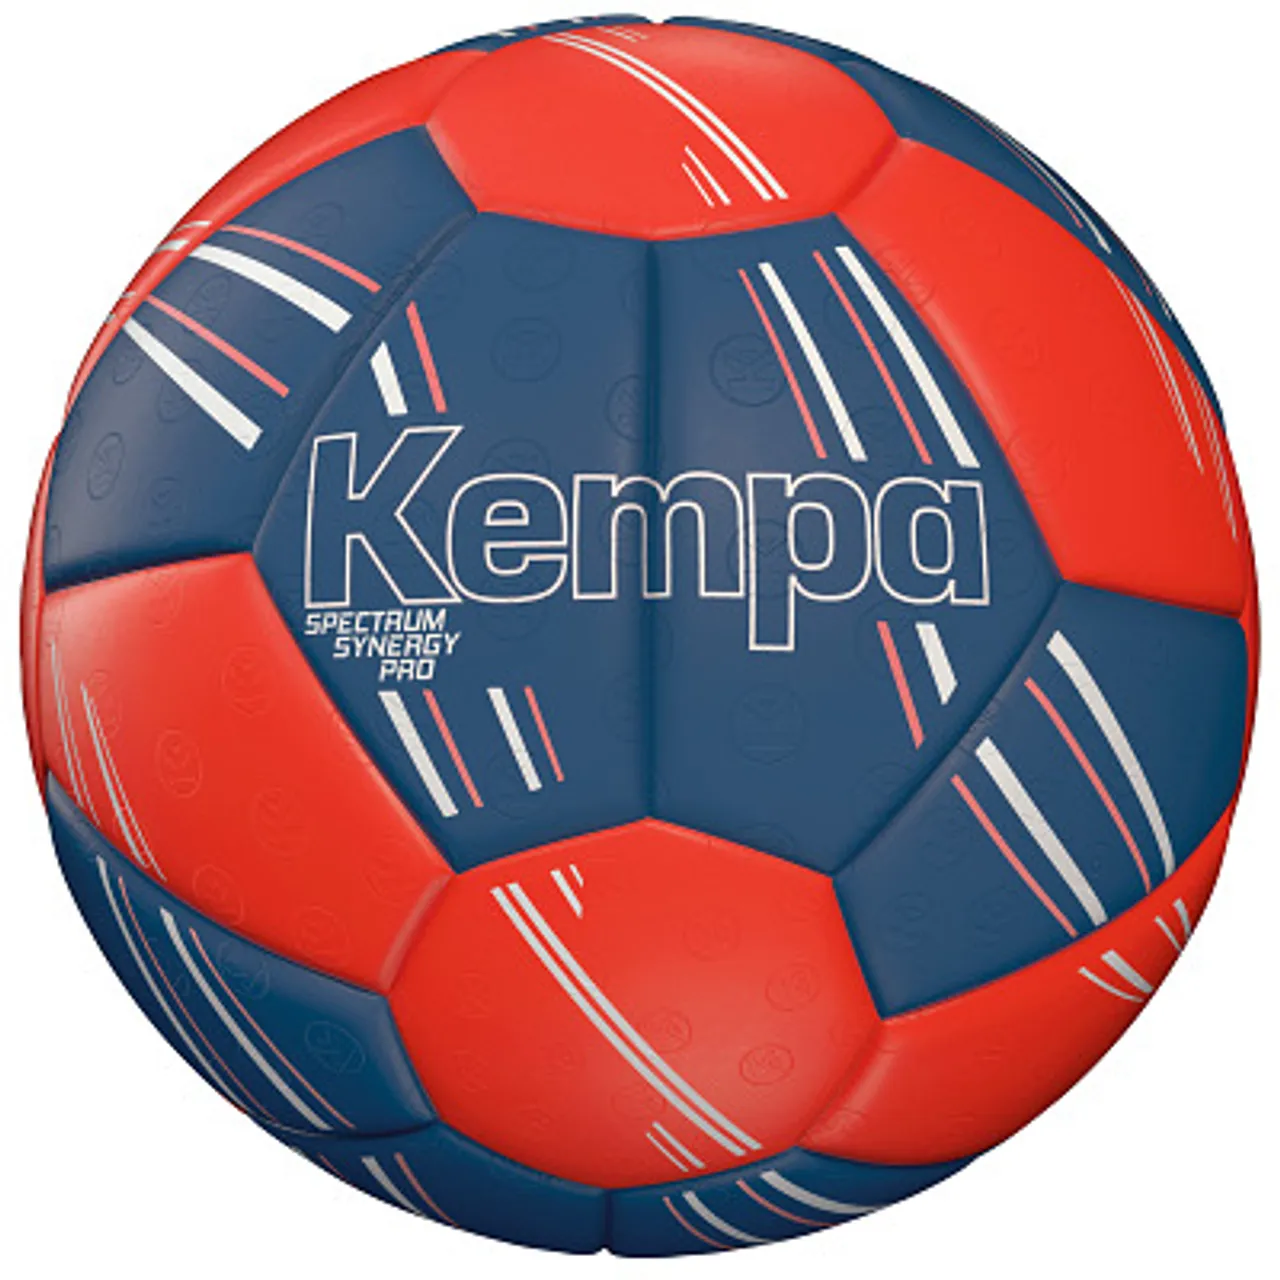 Kempa Handball "Spectrum Synergy Pro 2.0", 2